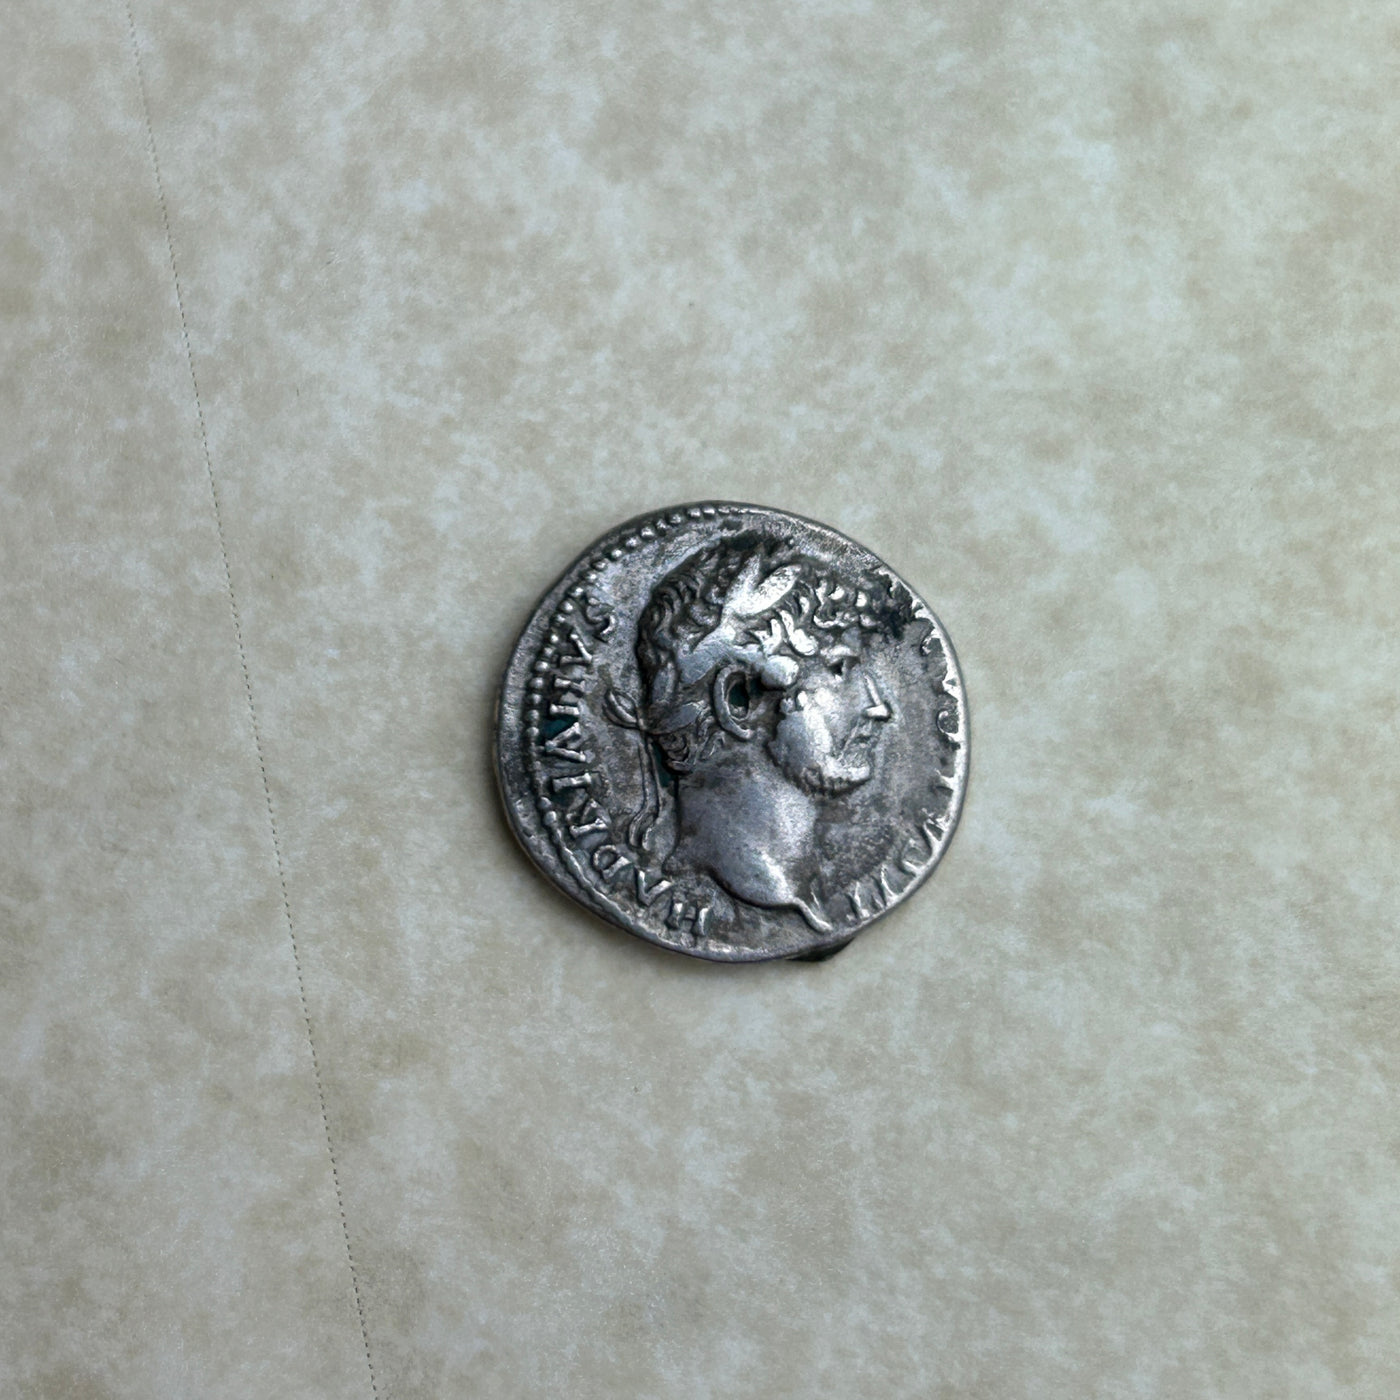 Gold Plated Hadrian Roman Coin Pendant